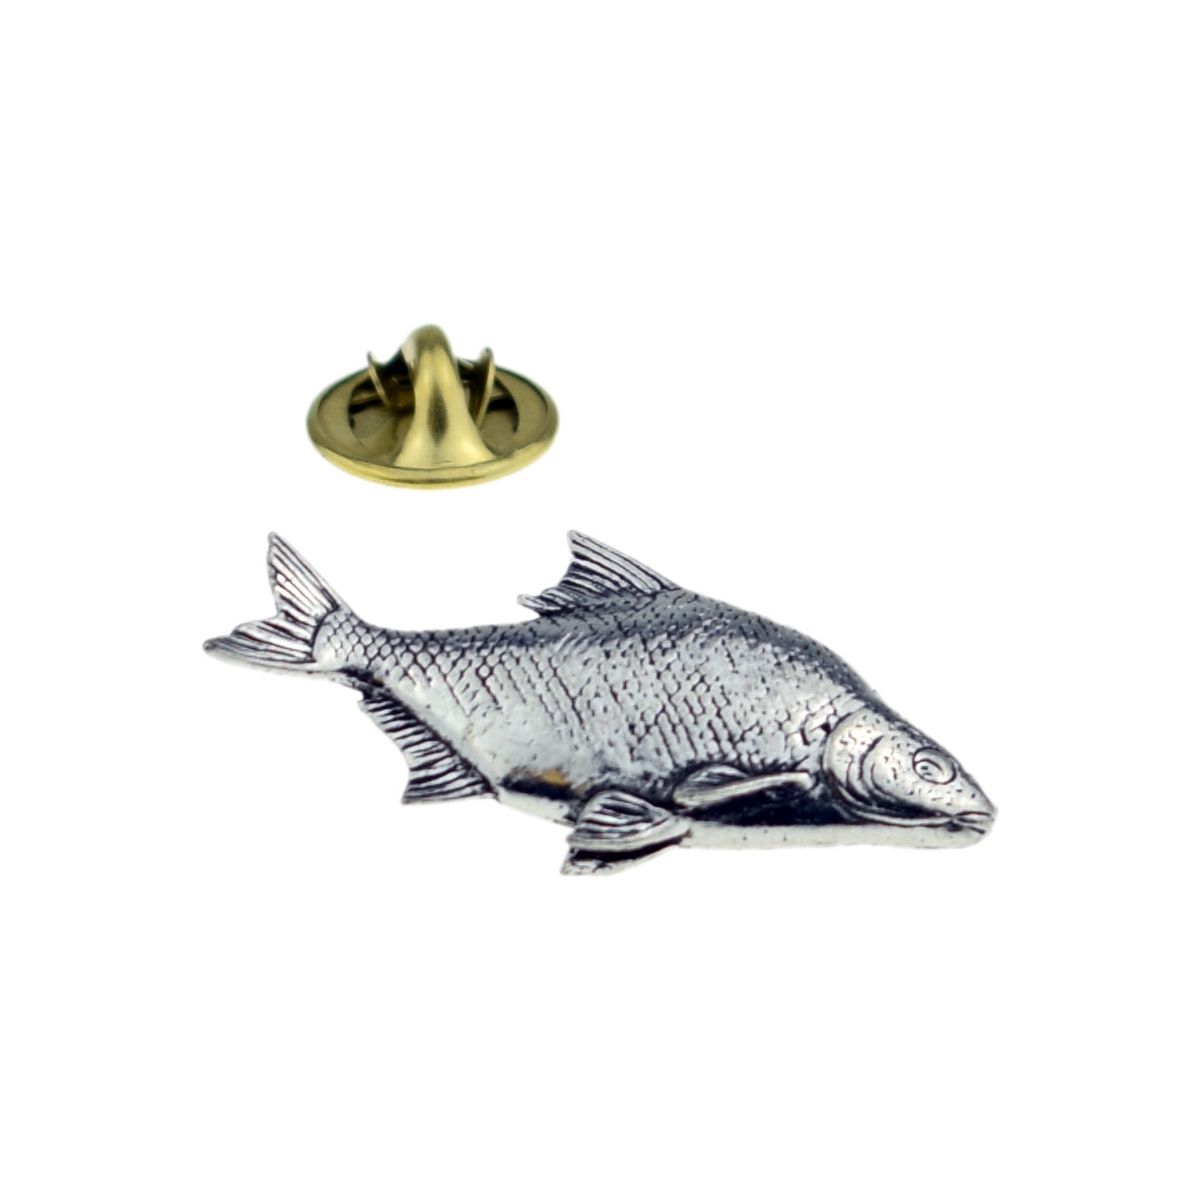 Bream fish fishing English Pewter Lapel Pin Badge - Ashton and Finch